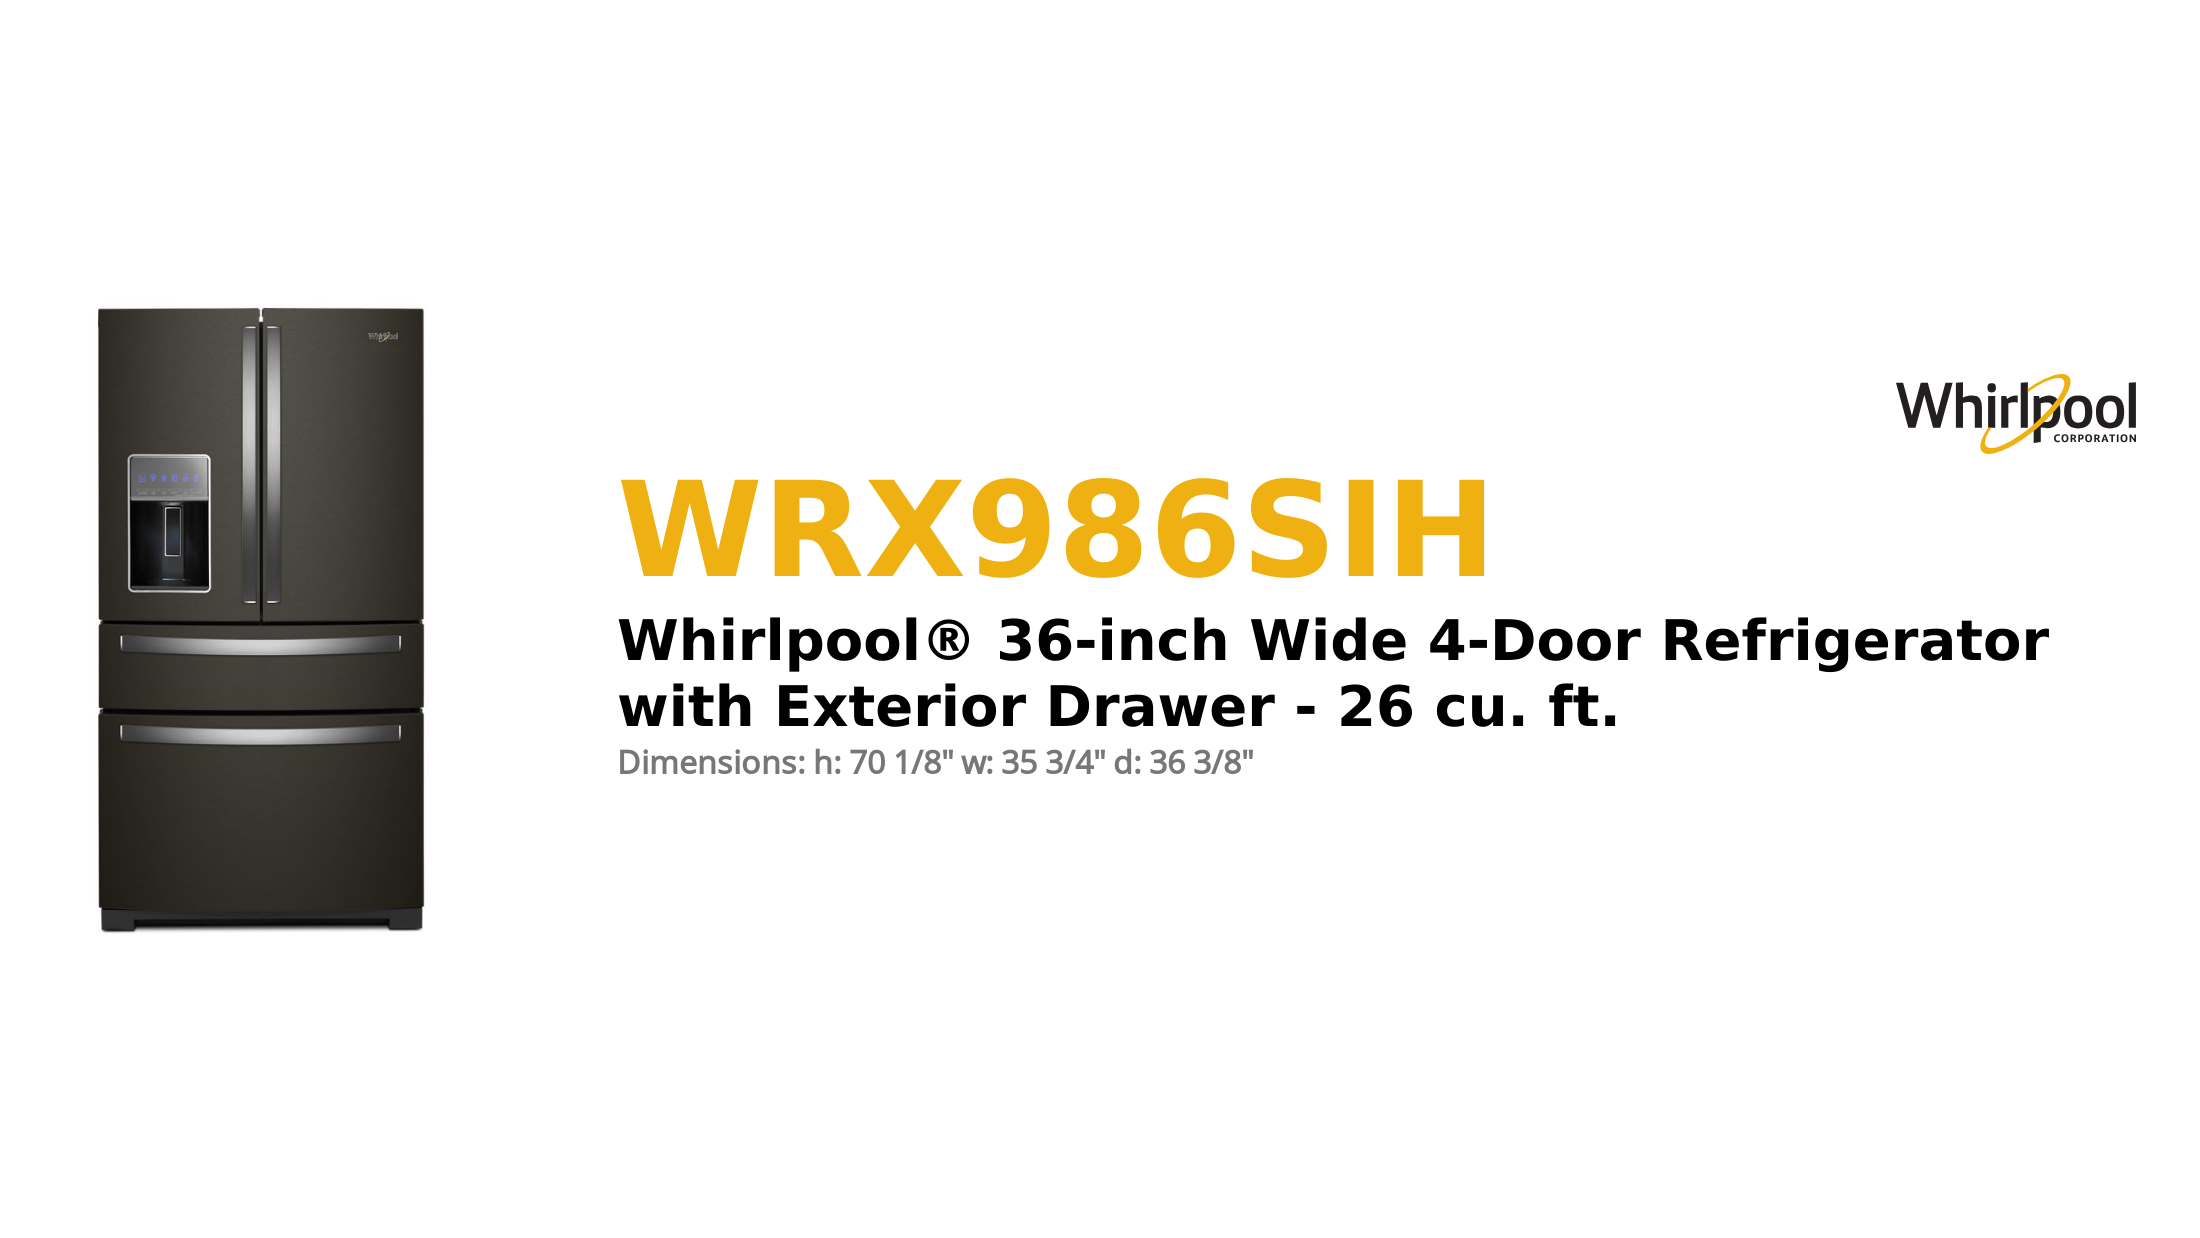 Whirlpool® 36-inch Wide 4-Door Refrigerator with Exterior Drawer - 26 cu. ft.